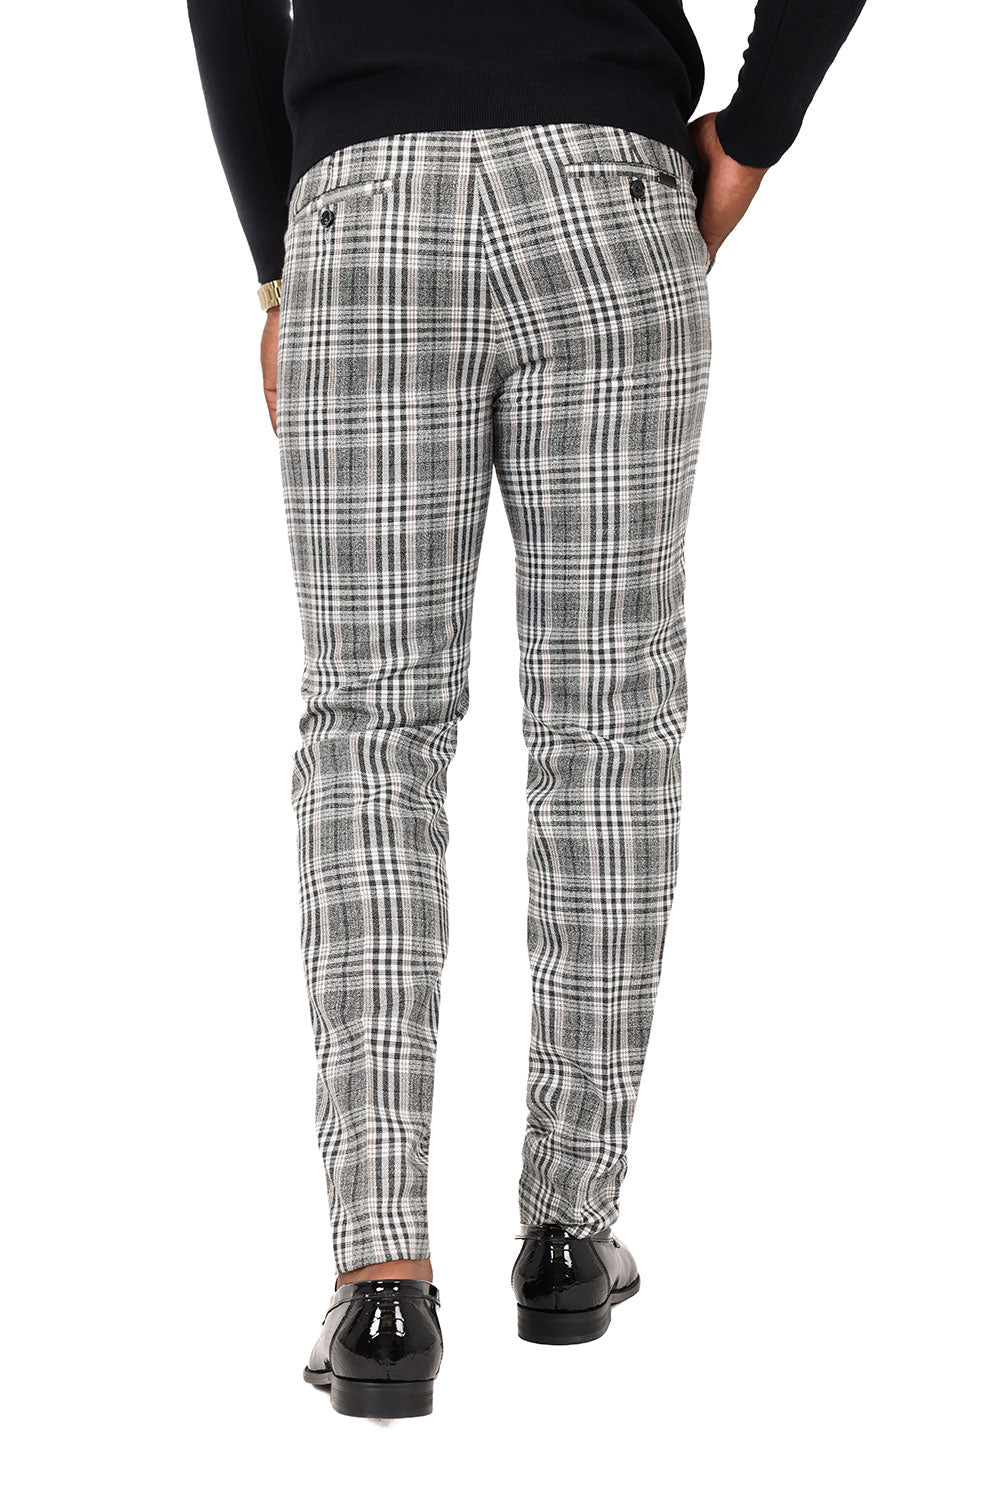 Barabas Men's Printed Checkered Plaid Design Chino Pants 2CP188 Grey Silver